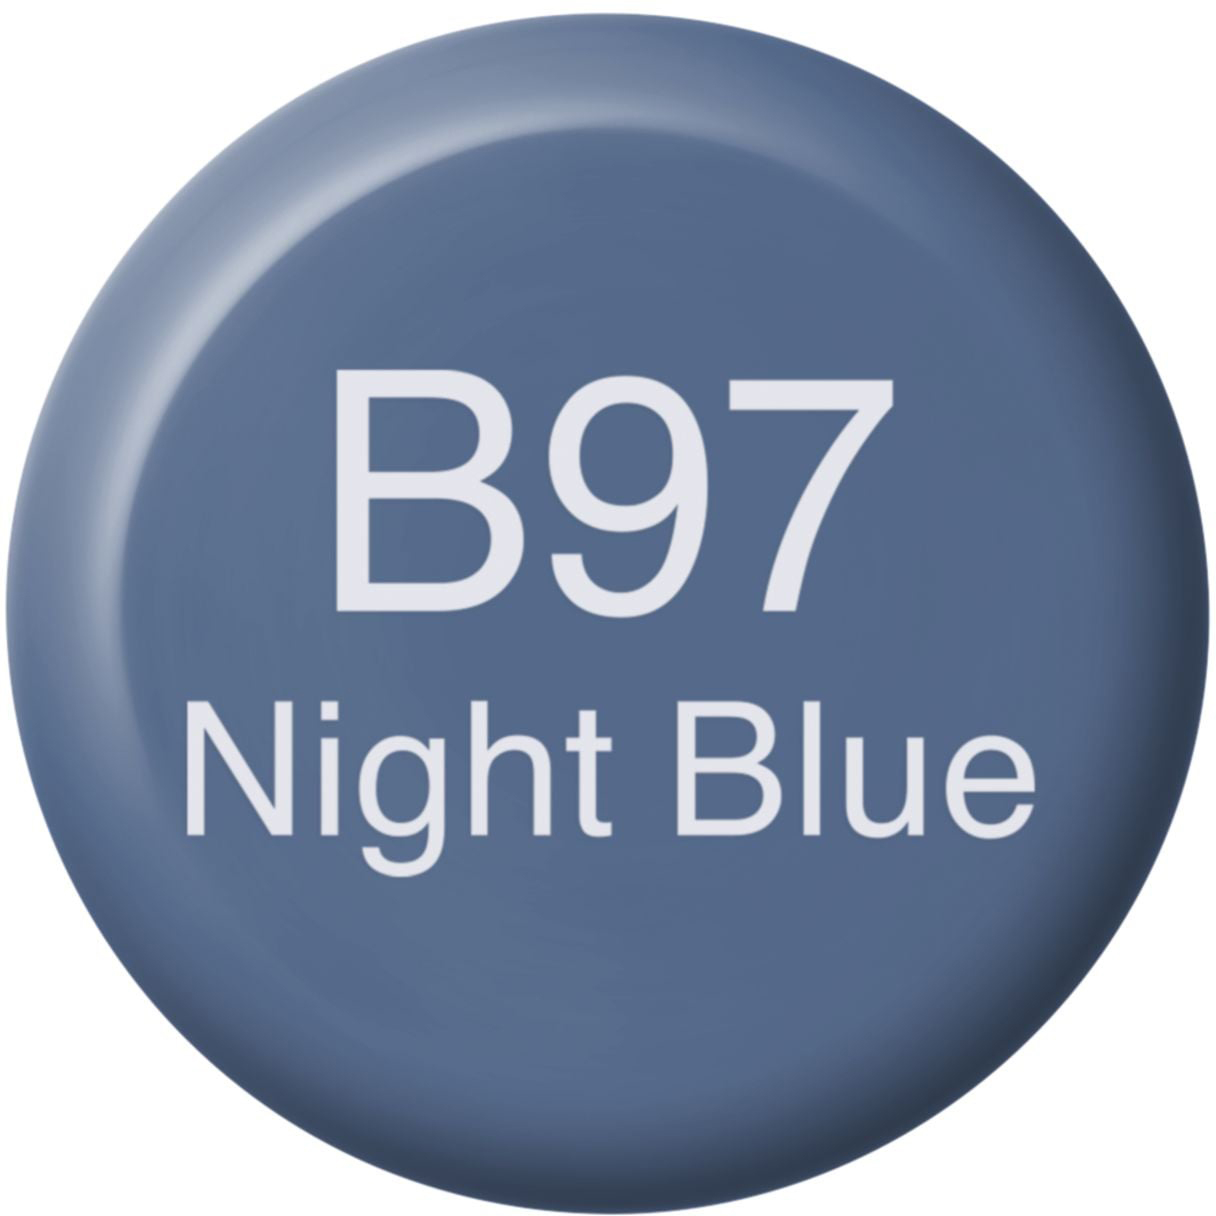 COPIC Ink Refill 21076157 B97 - Night Blue